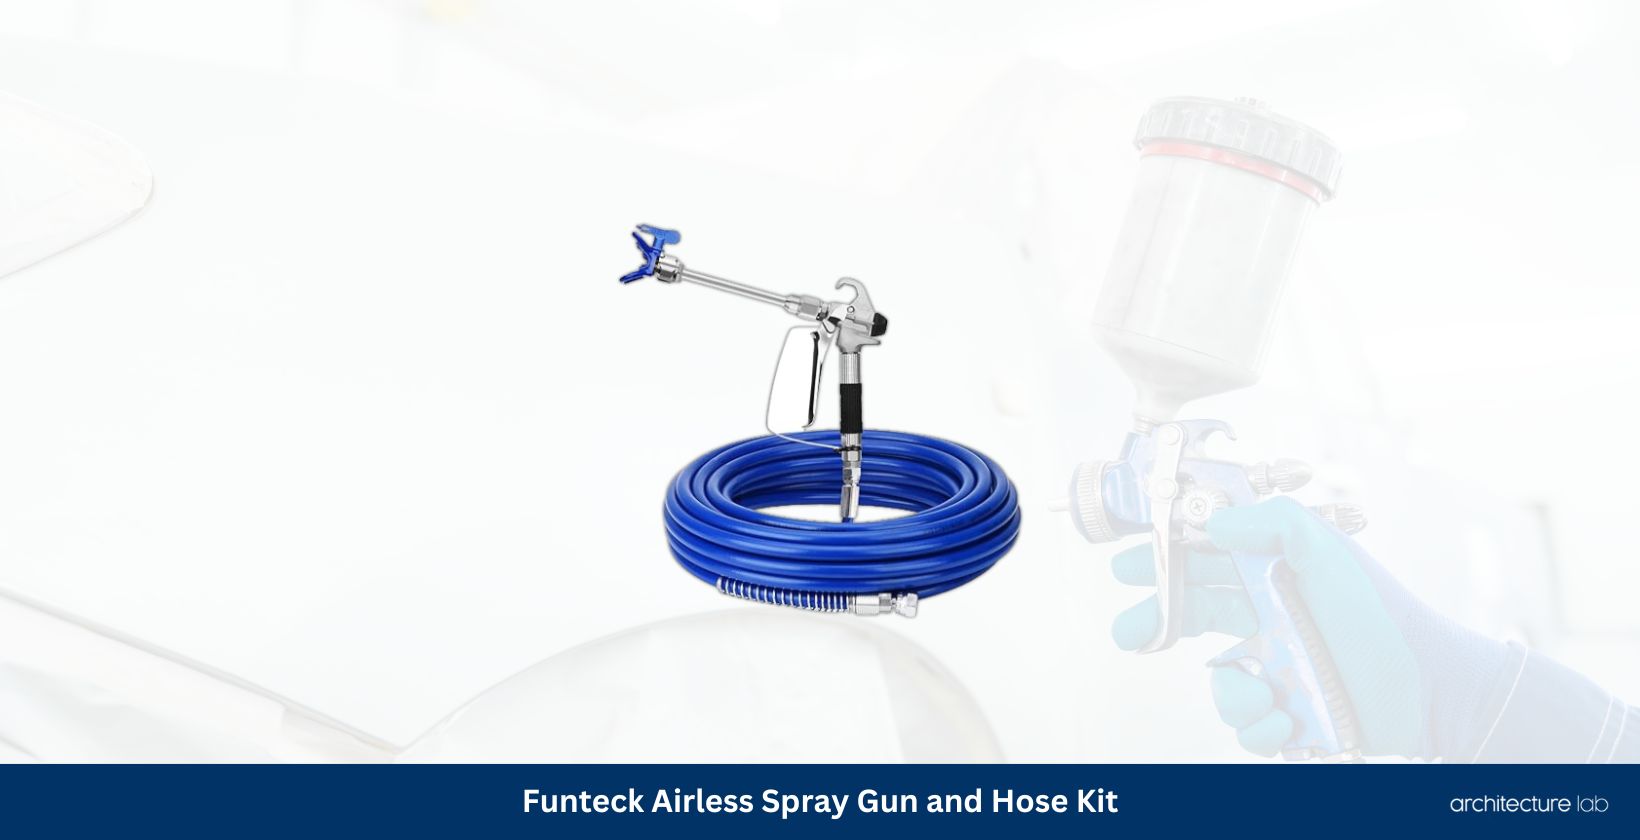 Funteck airless spray gun and hose kit